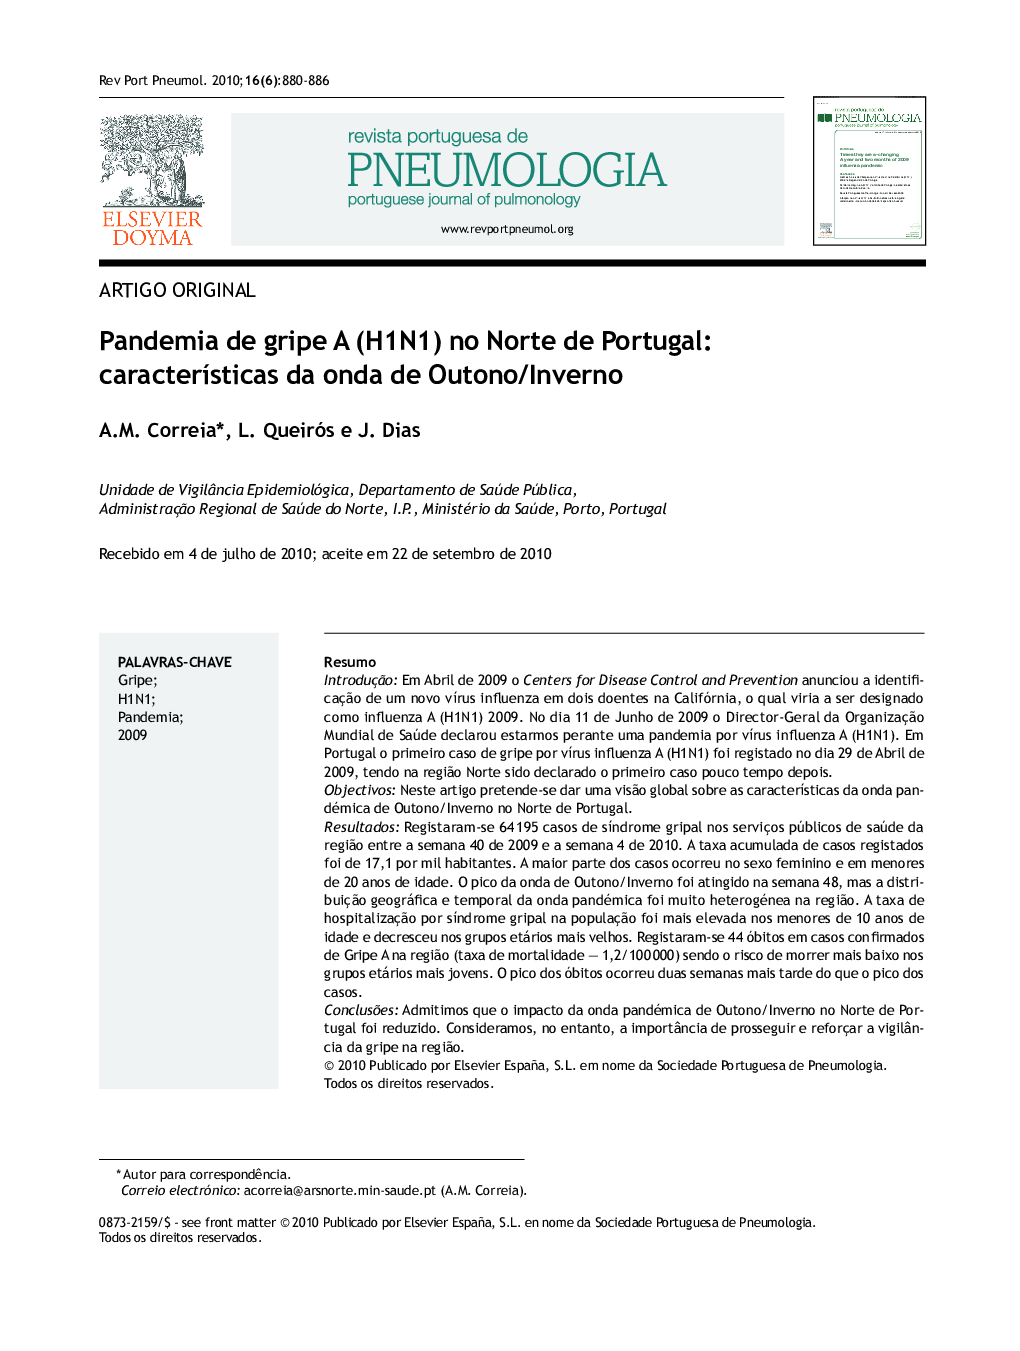 Pandemia de gripe A (H1N1) no Norte de Portugal: características da onda de Outono/Inverno